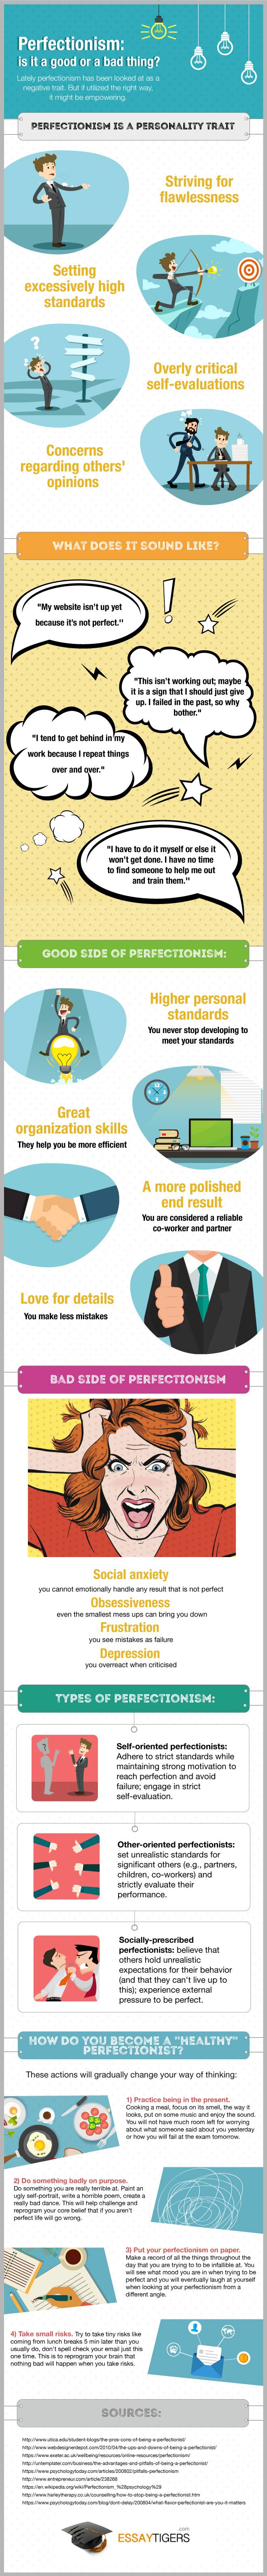 perfectionism infographic